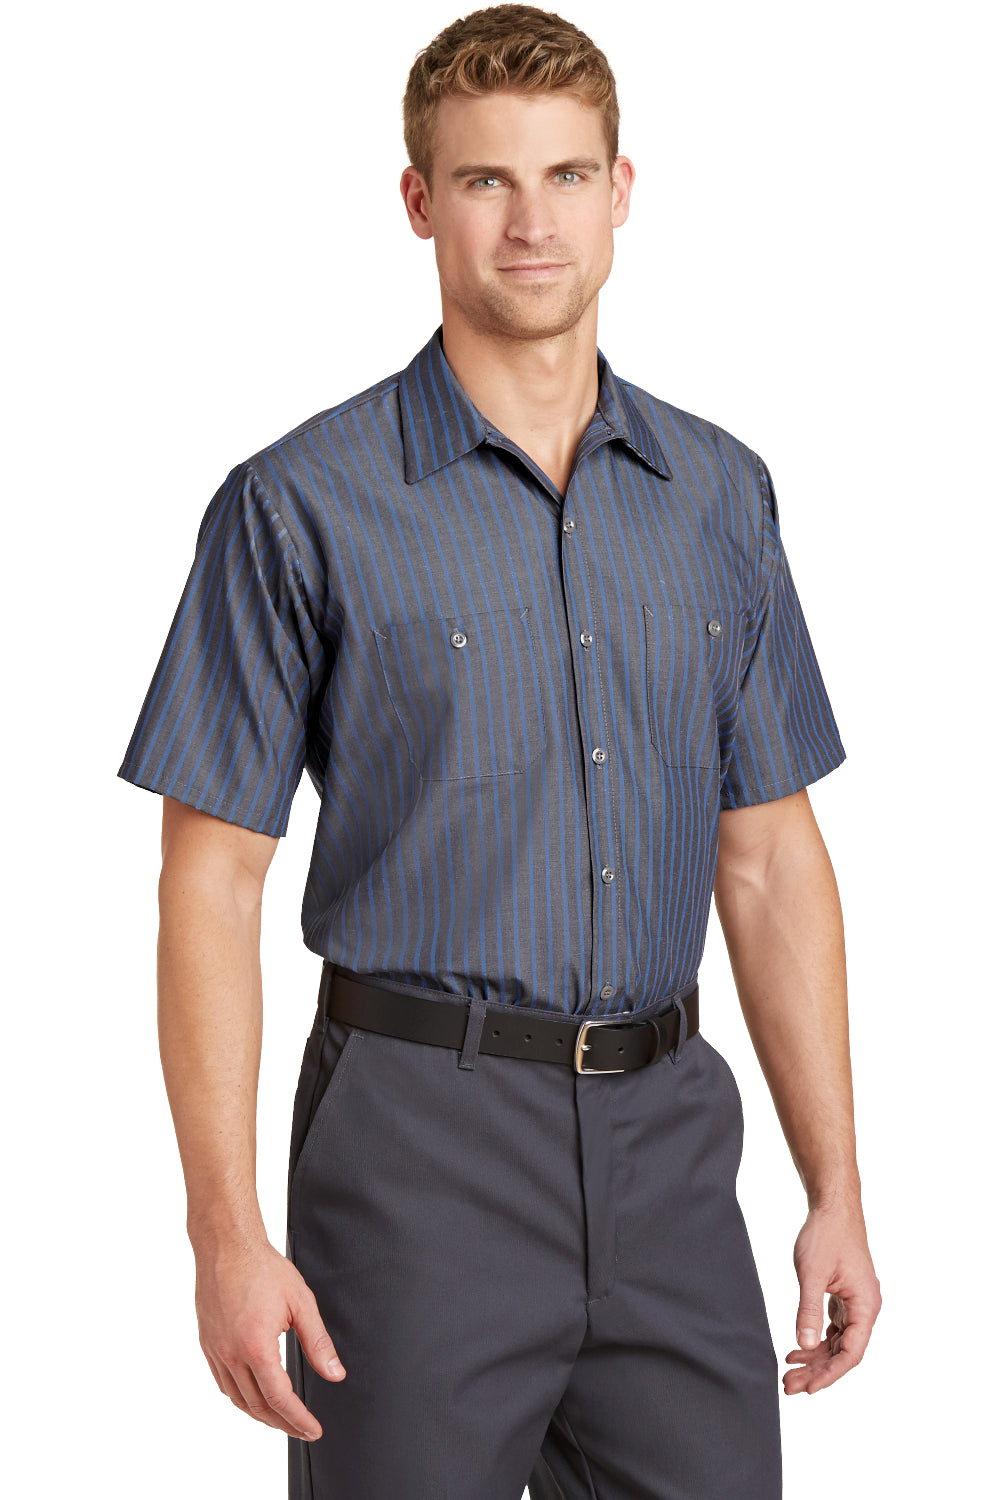 Red Kap CS20/CS20LONG Mens Industrial Moisture Wicking Short Sleeve Button Down Shirt w/ Double Pockets Grey/Blue 3Q